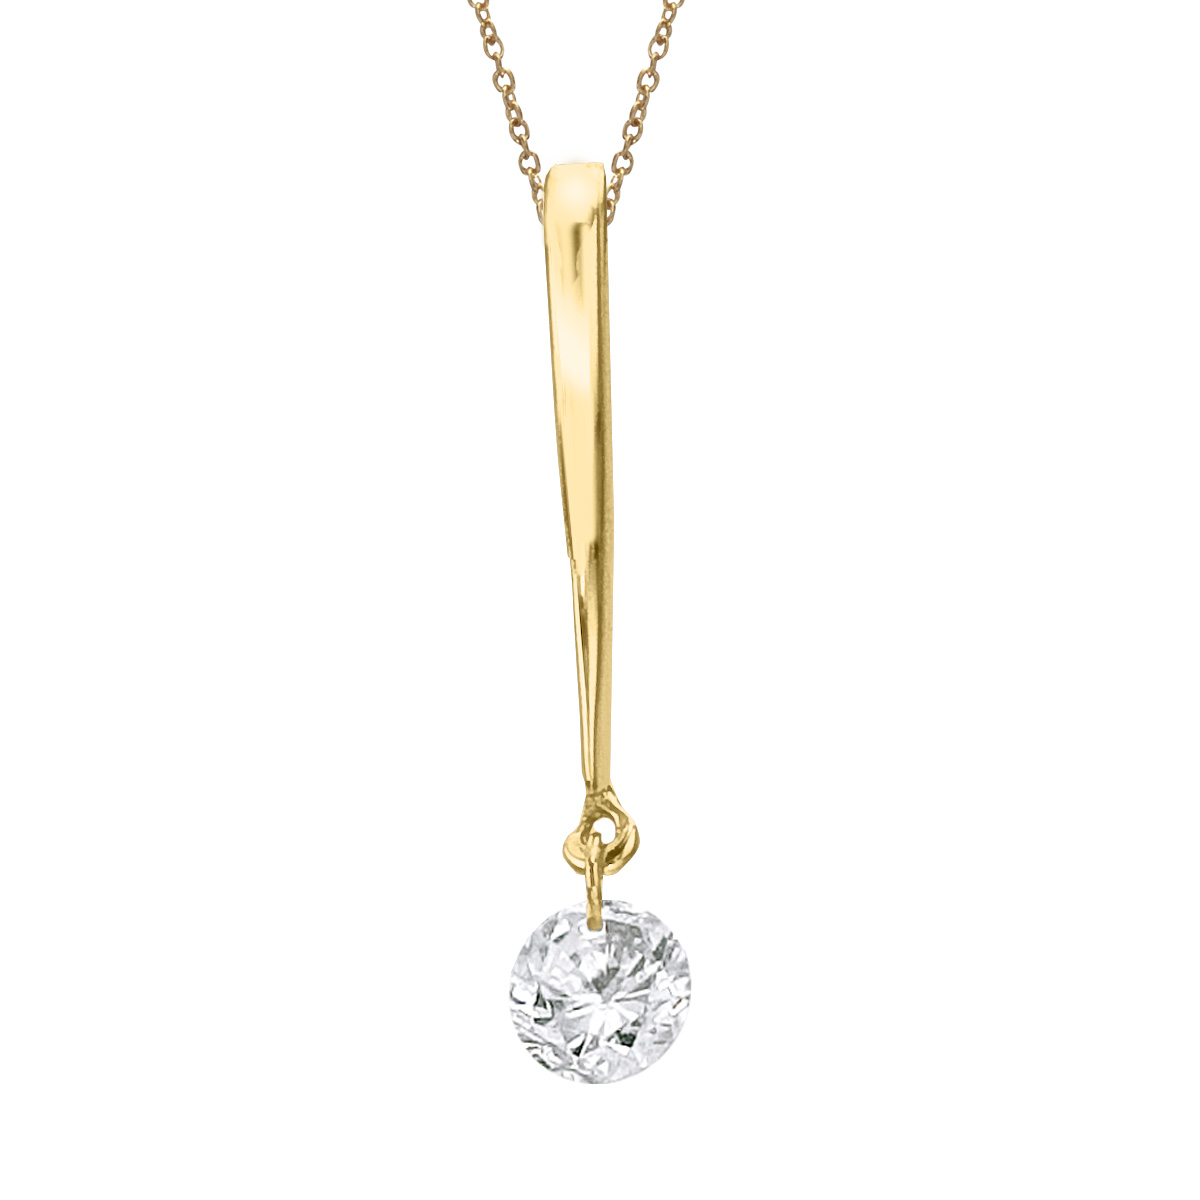 14k gold Dashinng Diamonds pendant with 0.15 total ct diamonds. The center dangling diamond dance...